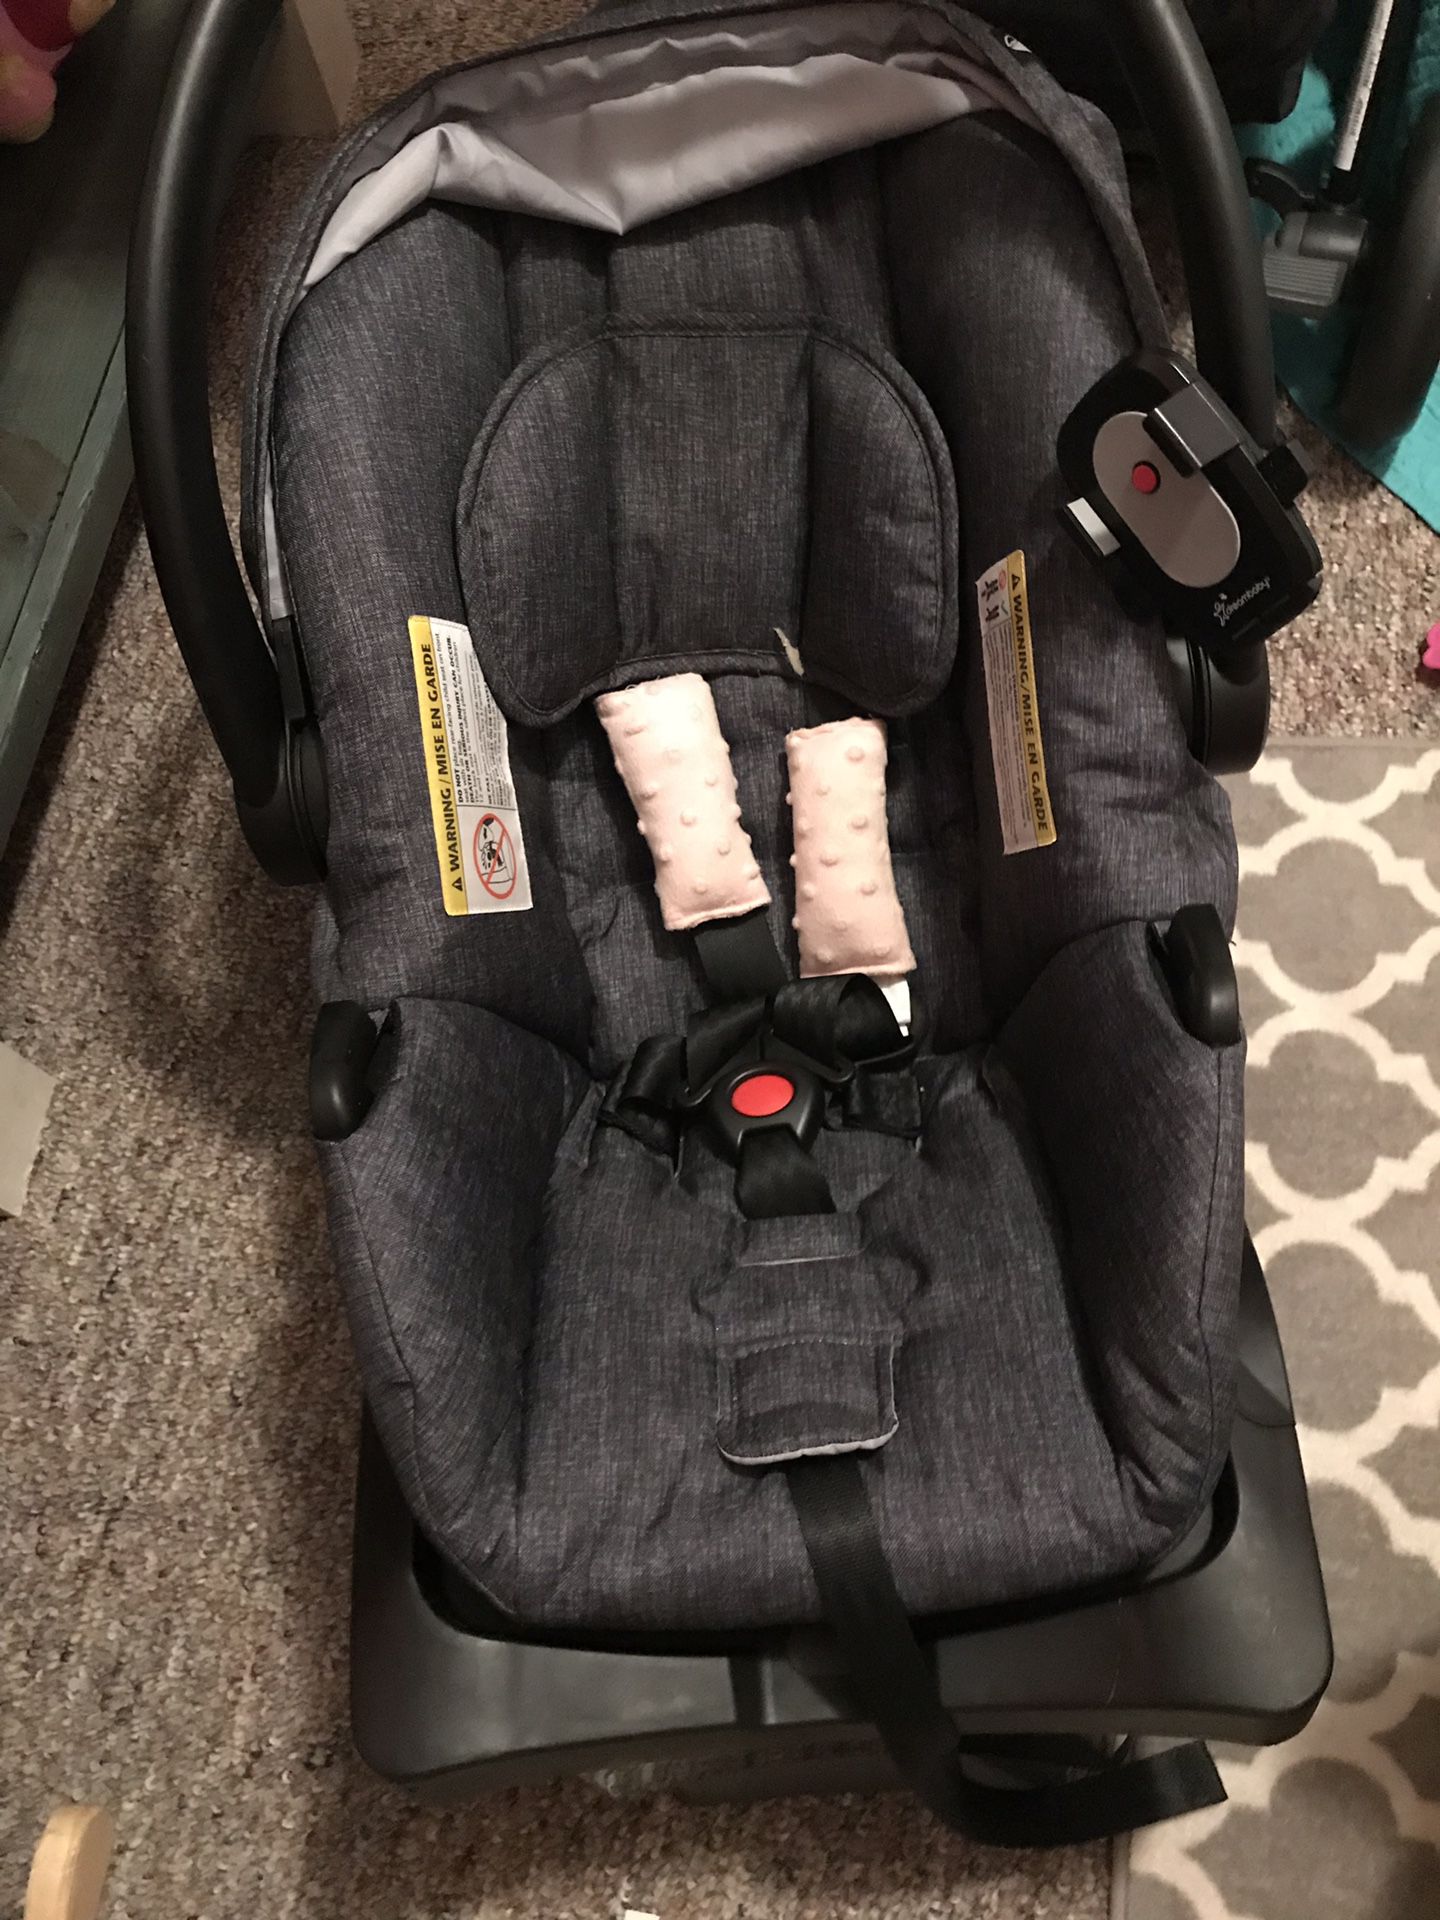 Evenflo infant car seat and base